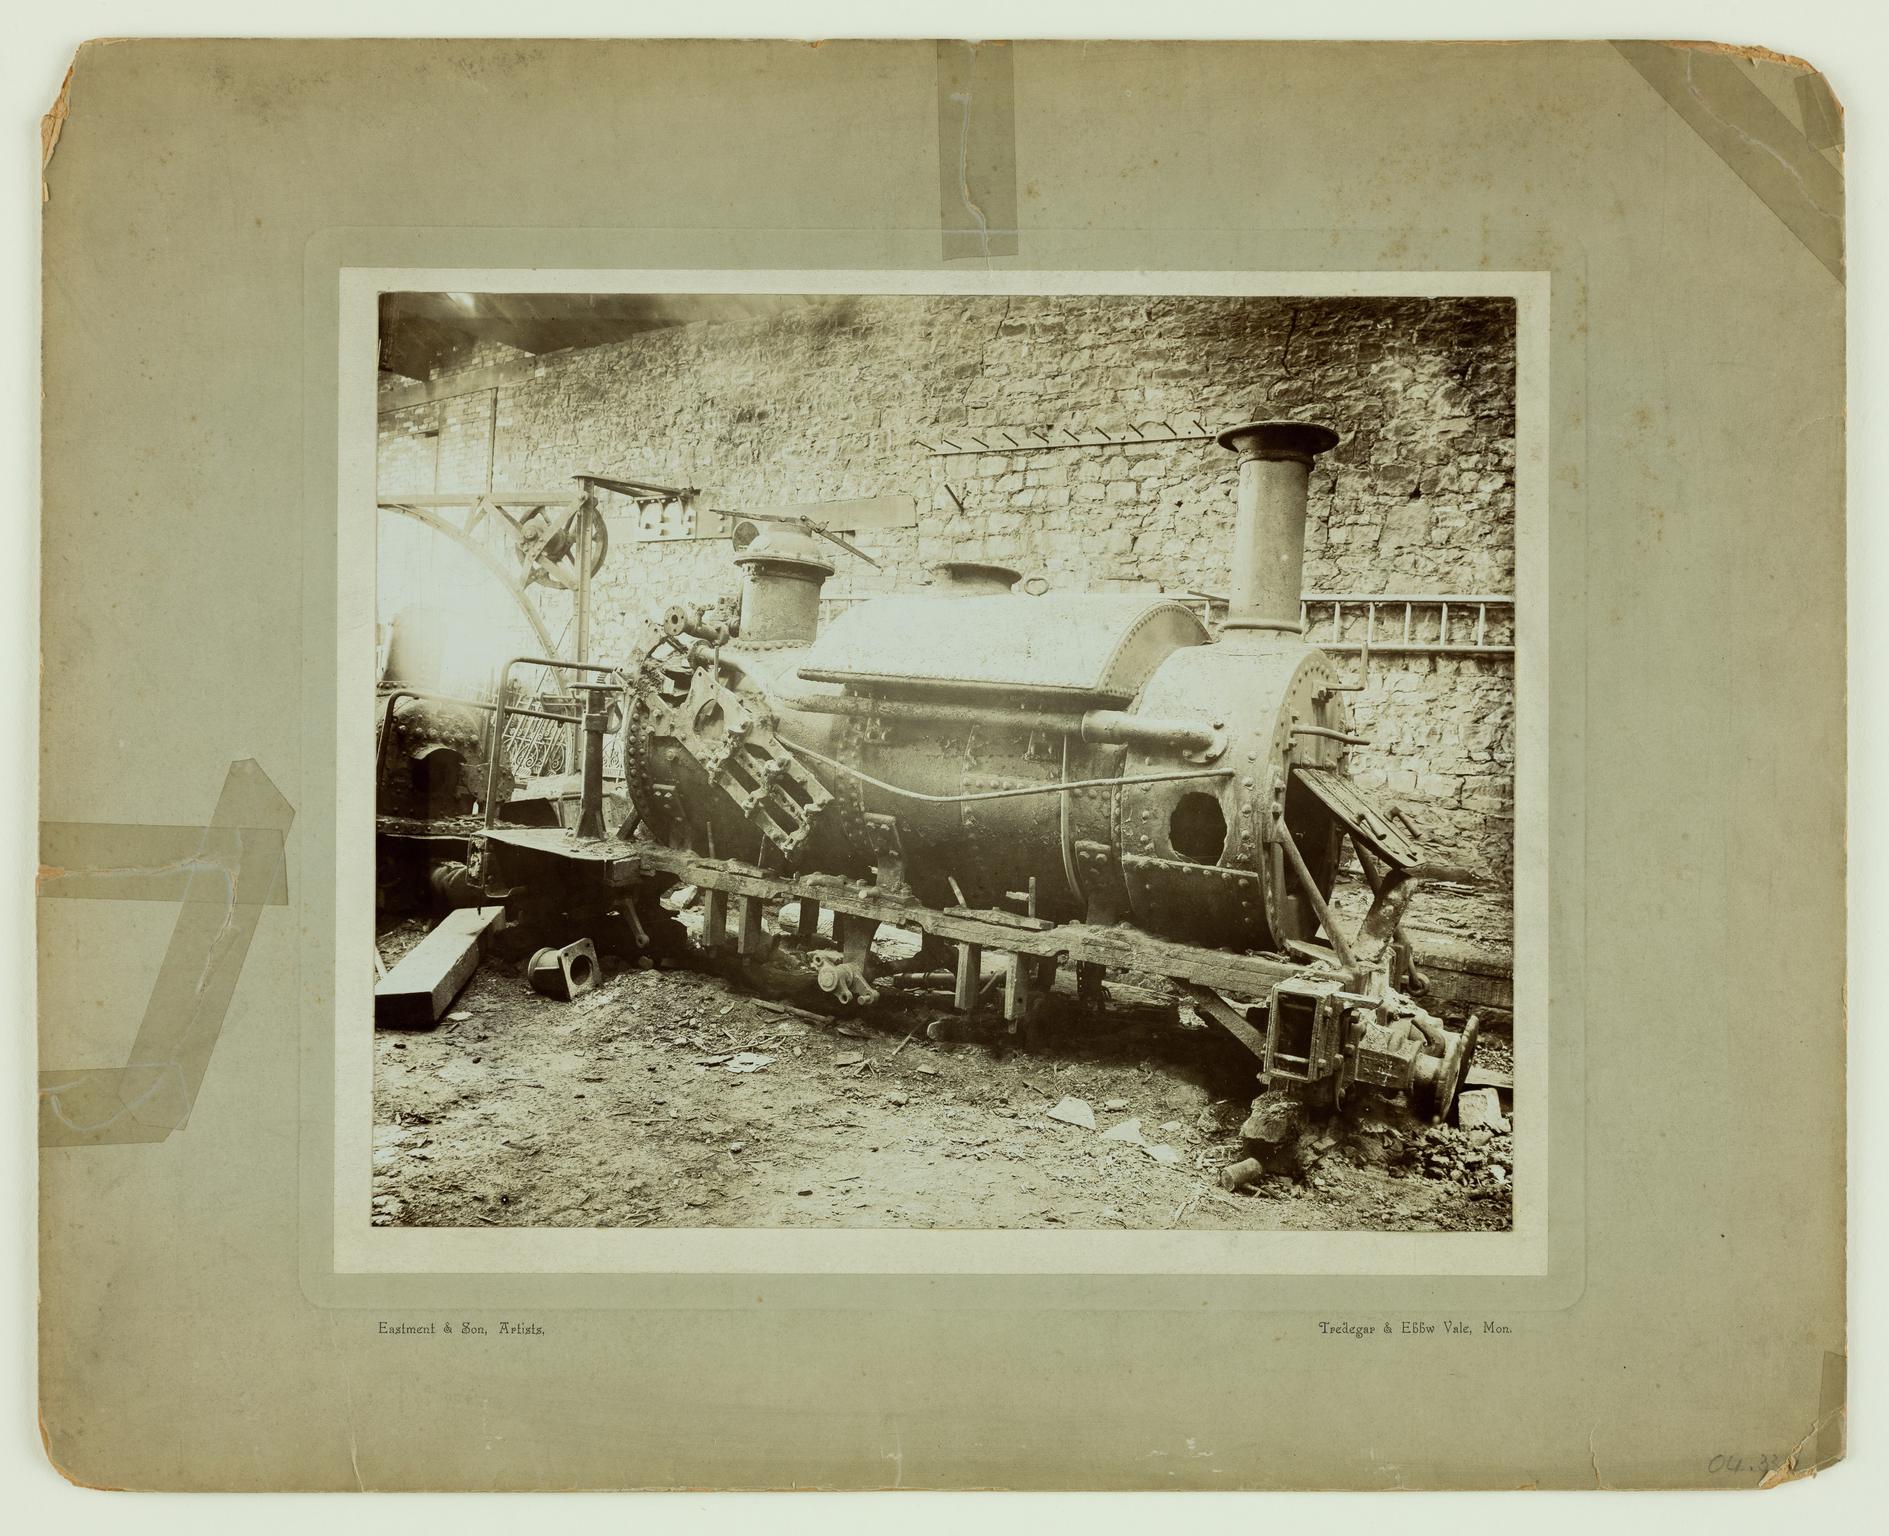 Partly dismantled derelict Tredegar locomotive